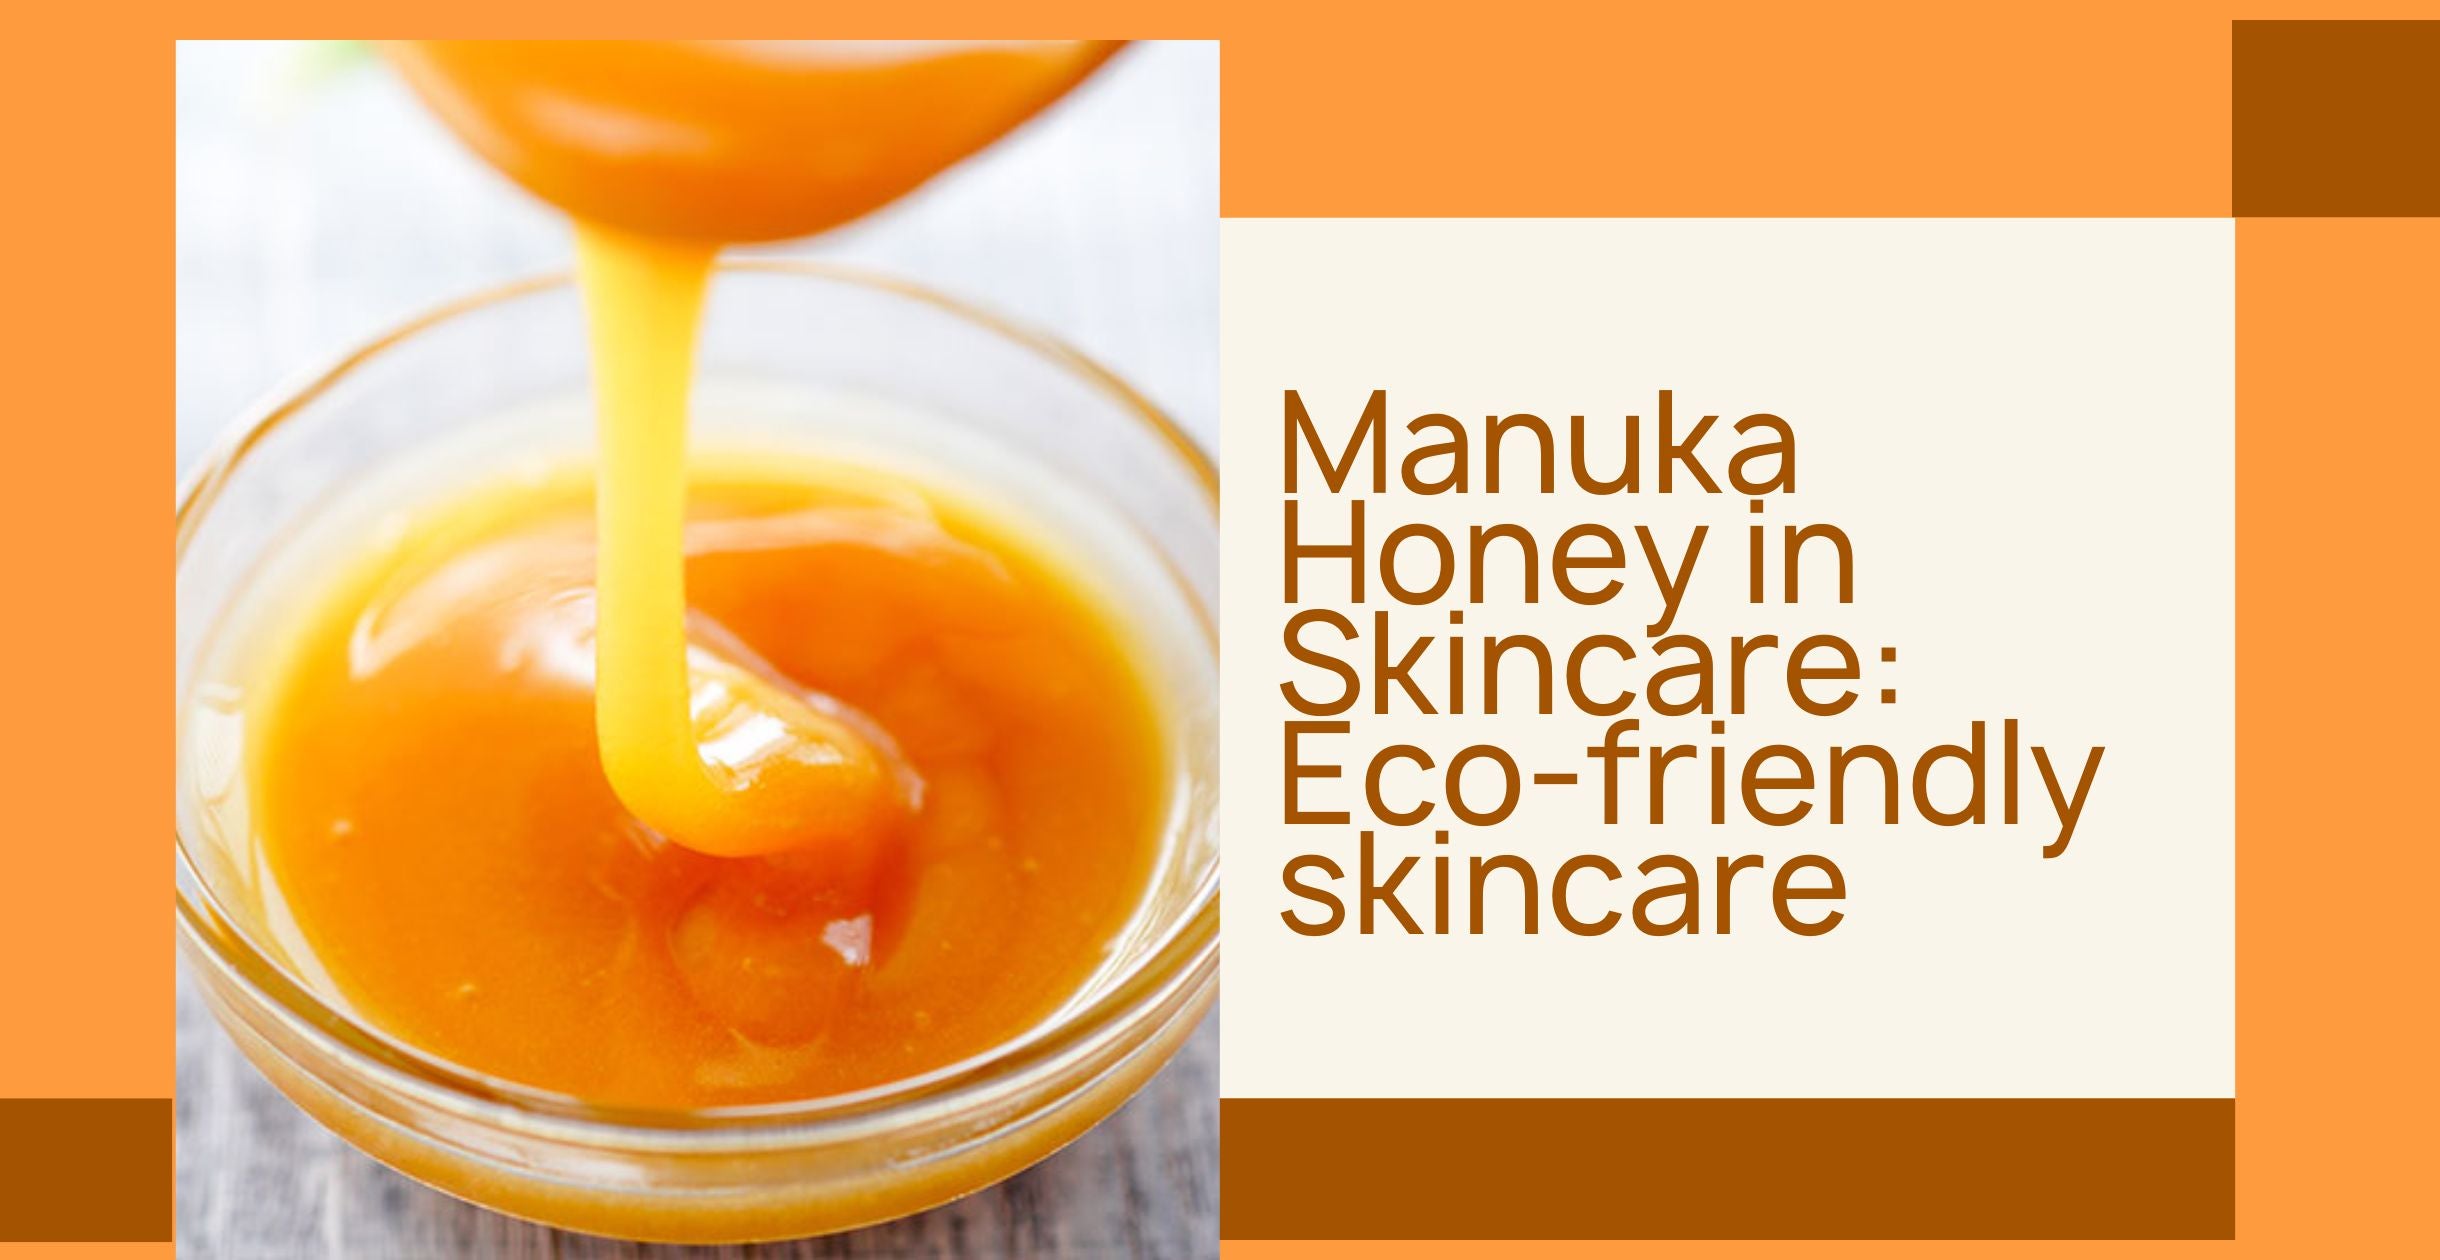 Manuka Honey in Skincare: Eco-friendly skincare